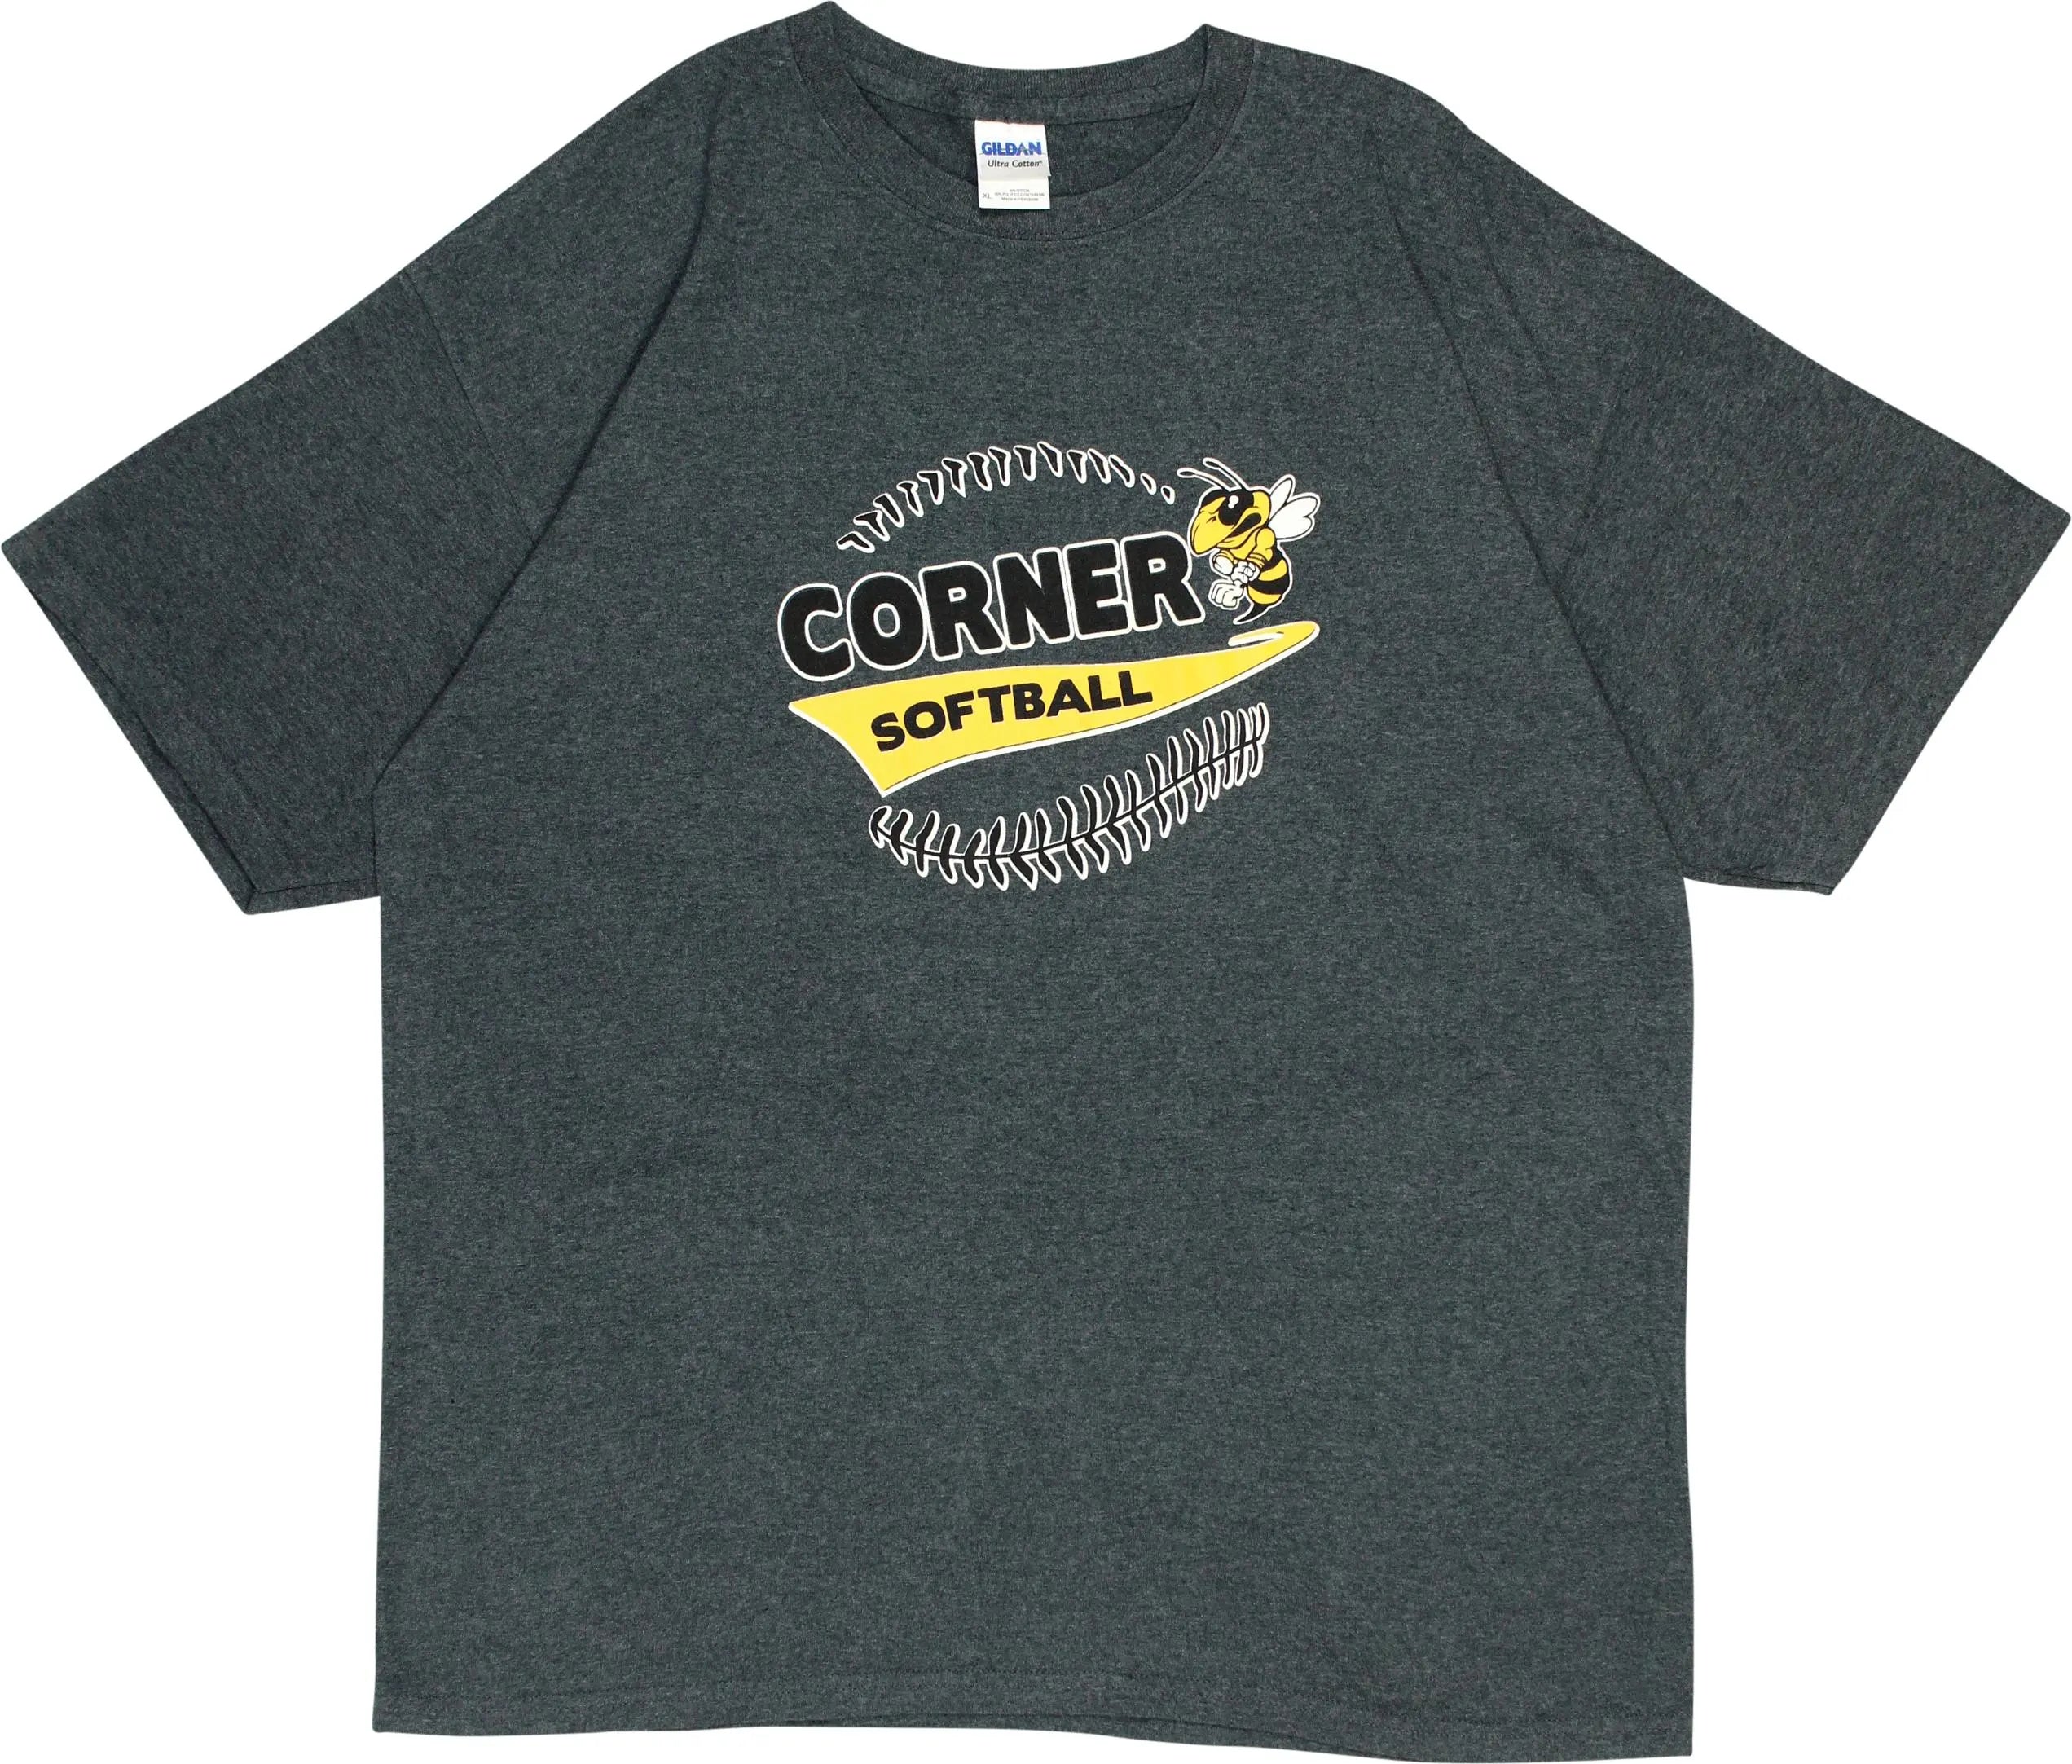 Gildan - Corner Softball T-Shirt- ThriftTale.com - Vintage and second handclothing